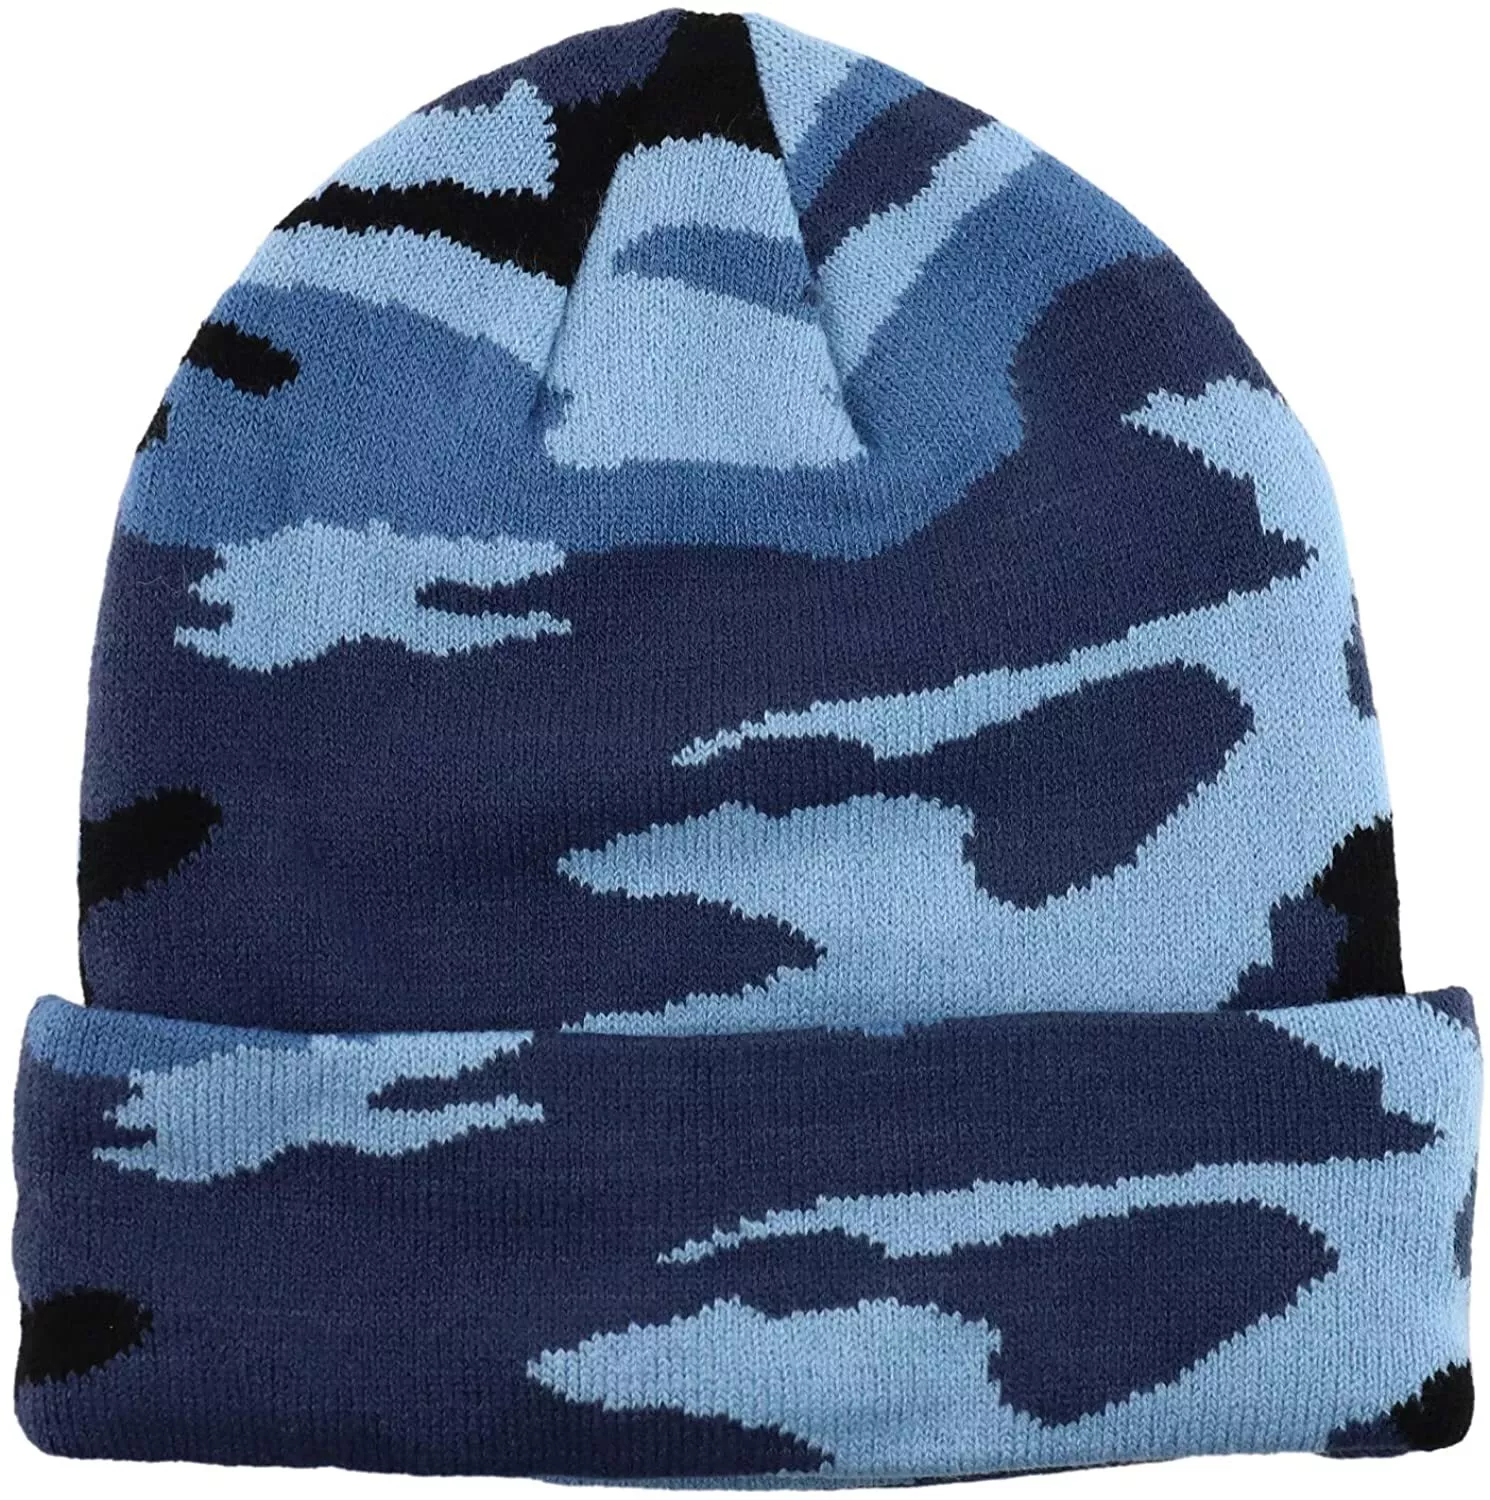 Unisex Plain Warm Knit Beanie Hat Cuff Skull Ski Cap Blue camo 1pcs - $9.99